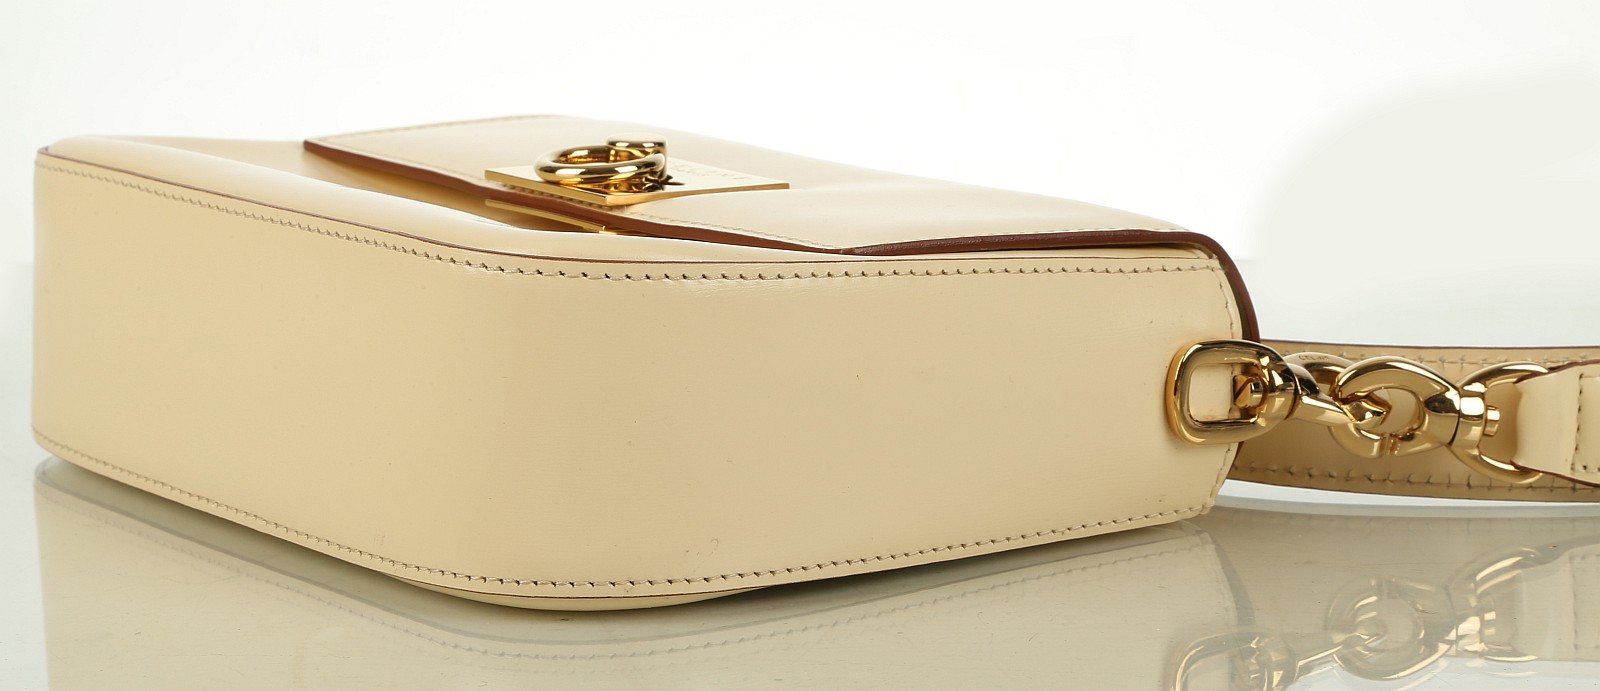 CELINE HANDBAG, cream leather with gilt metal clos - Image 5 of 6